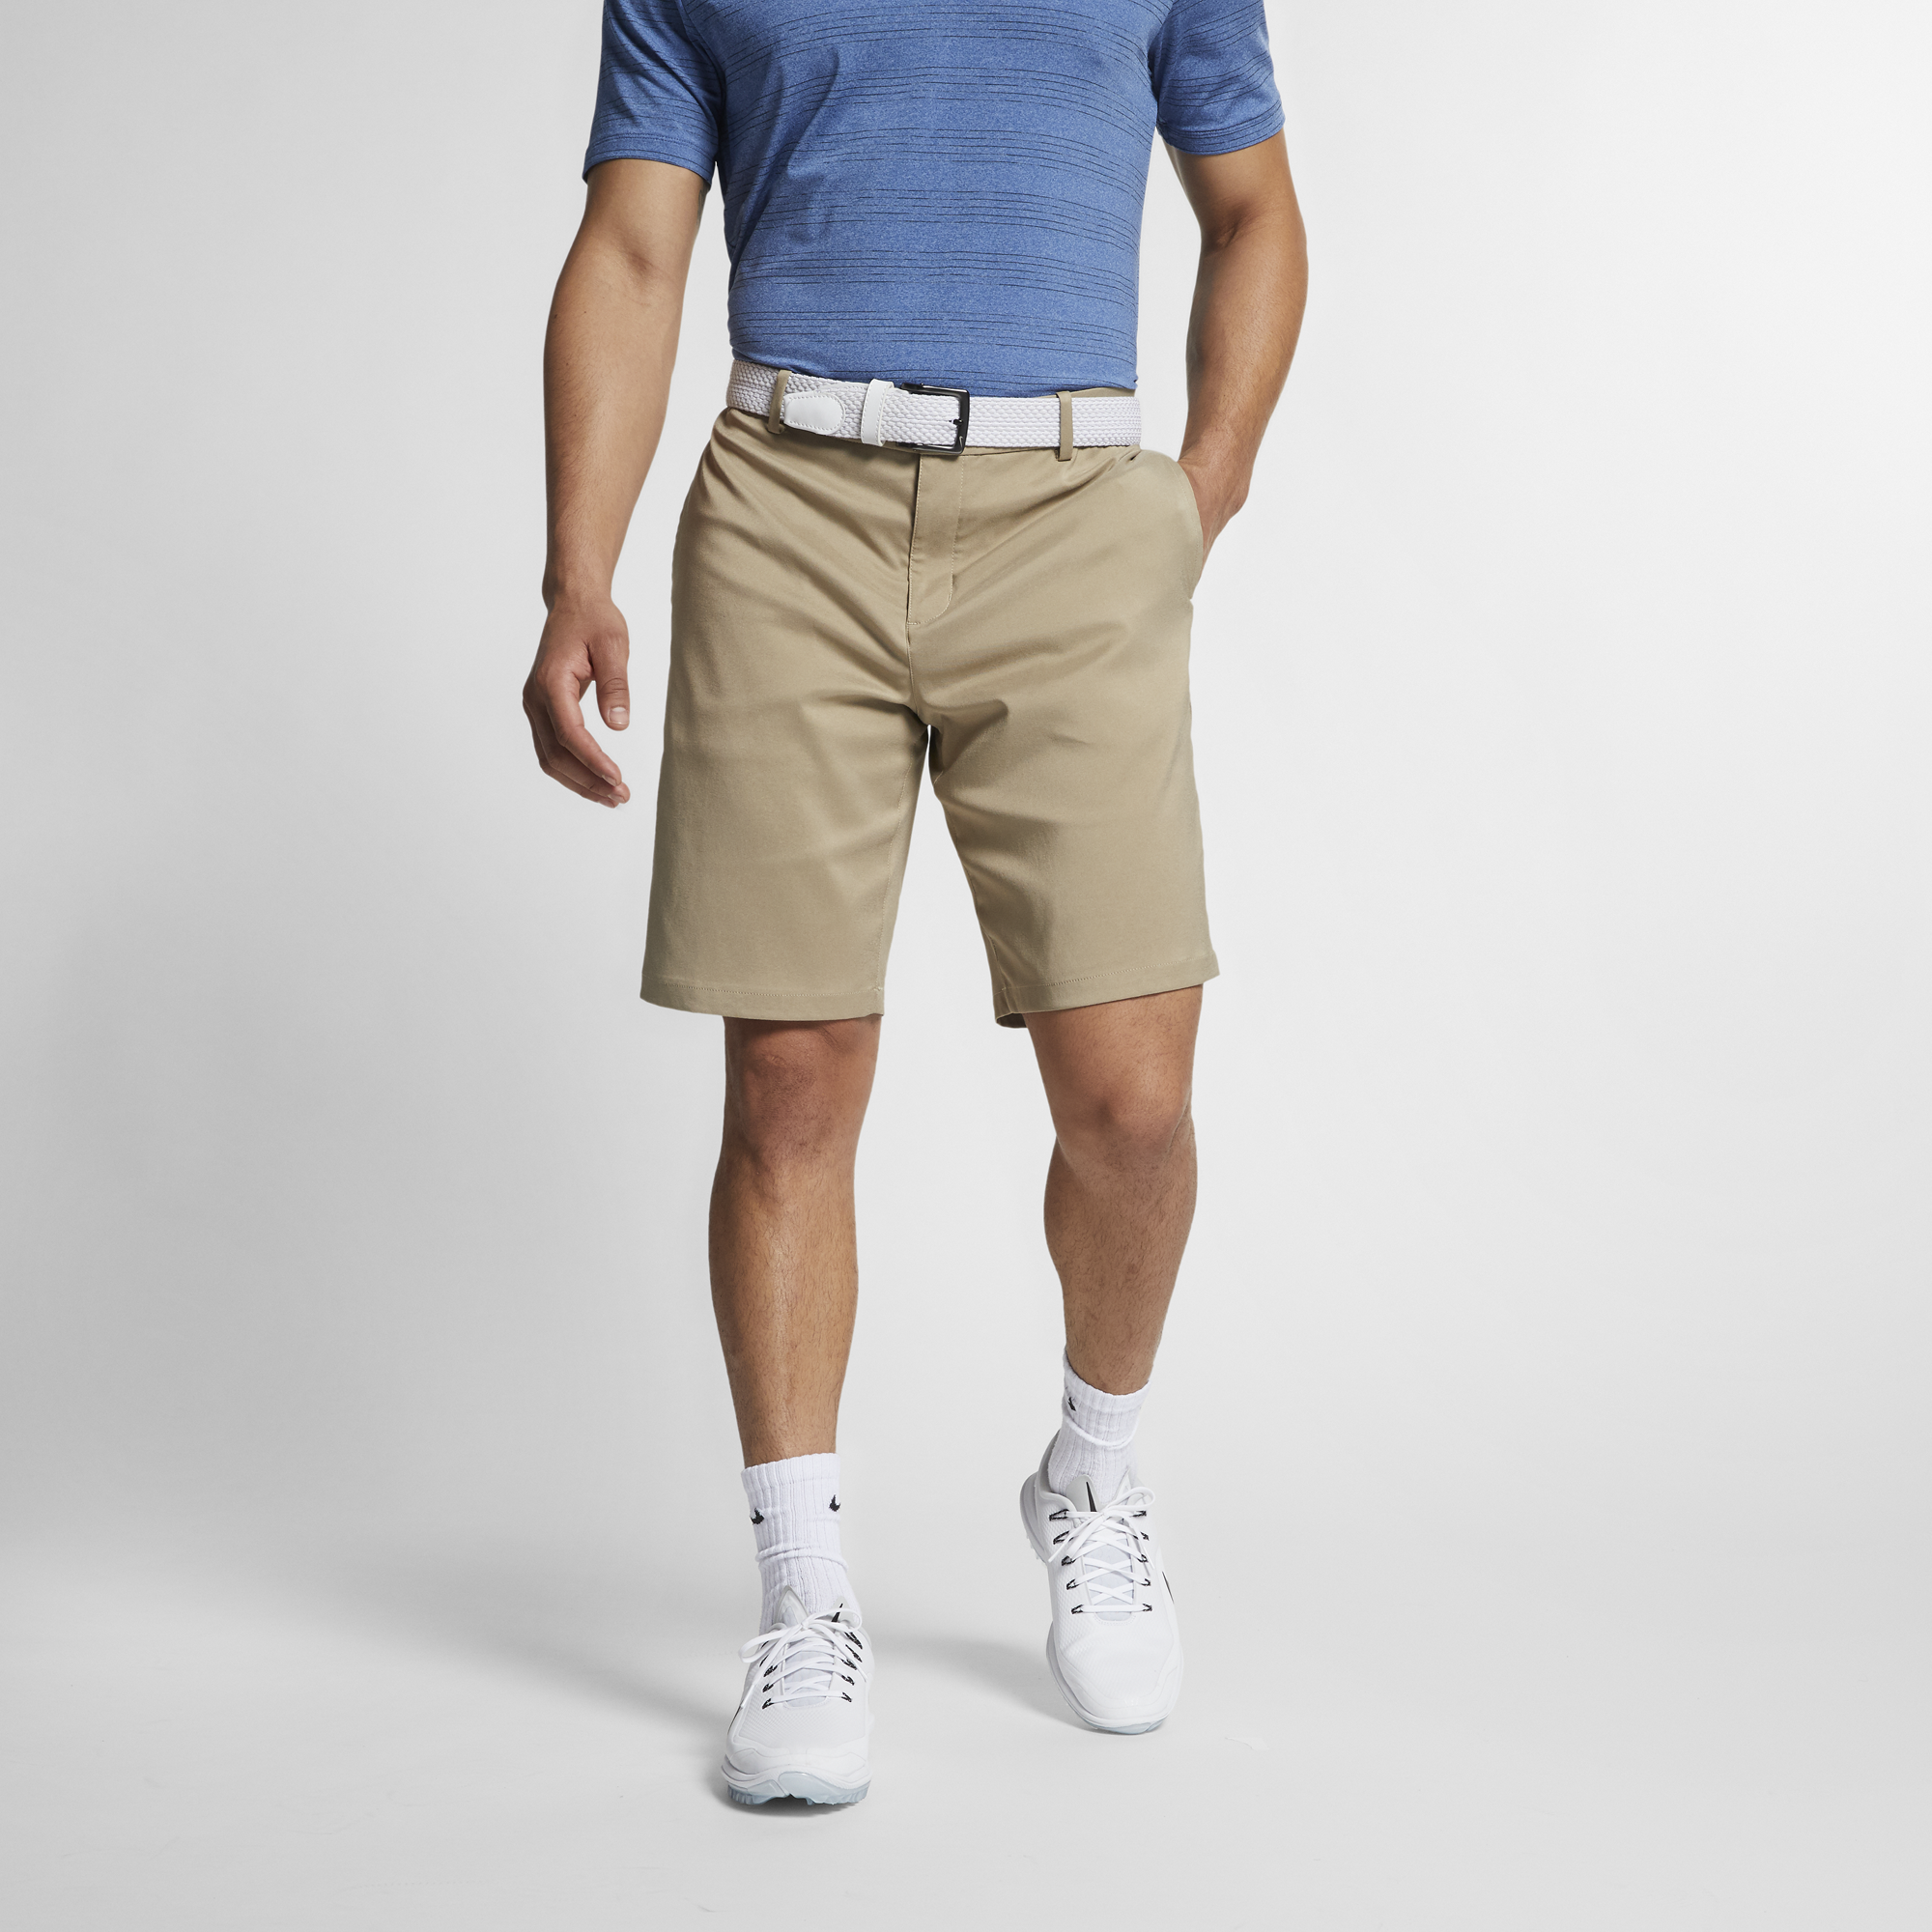 nike men's flex core shorts